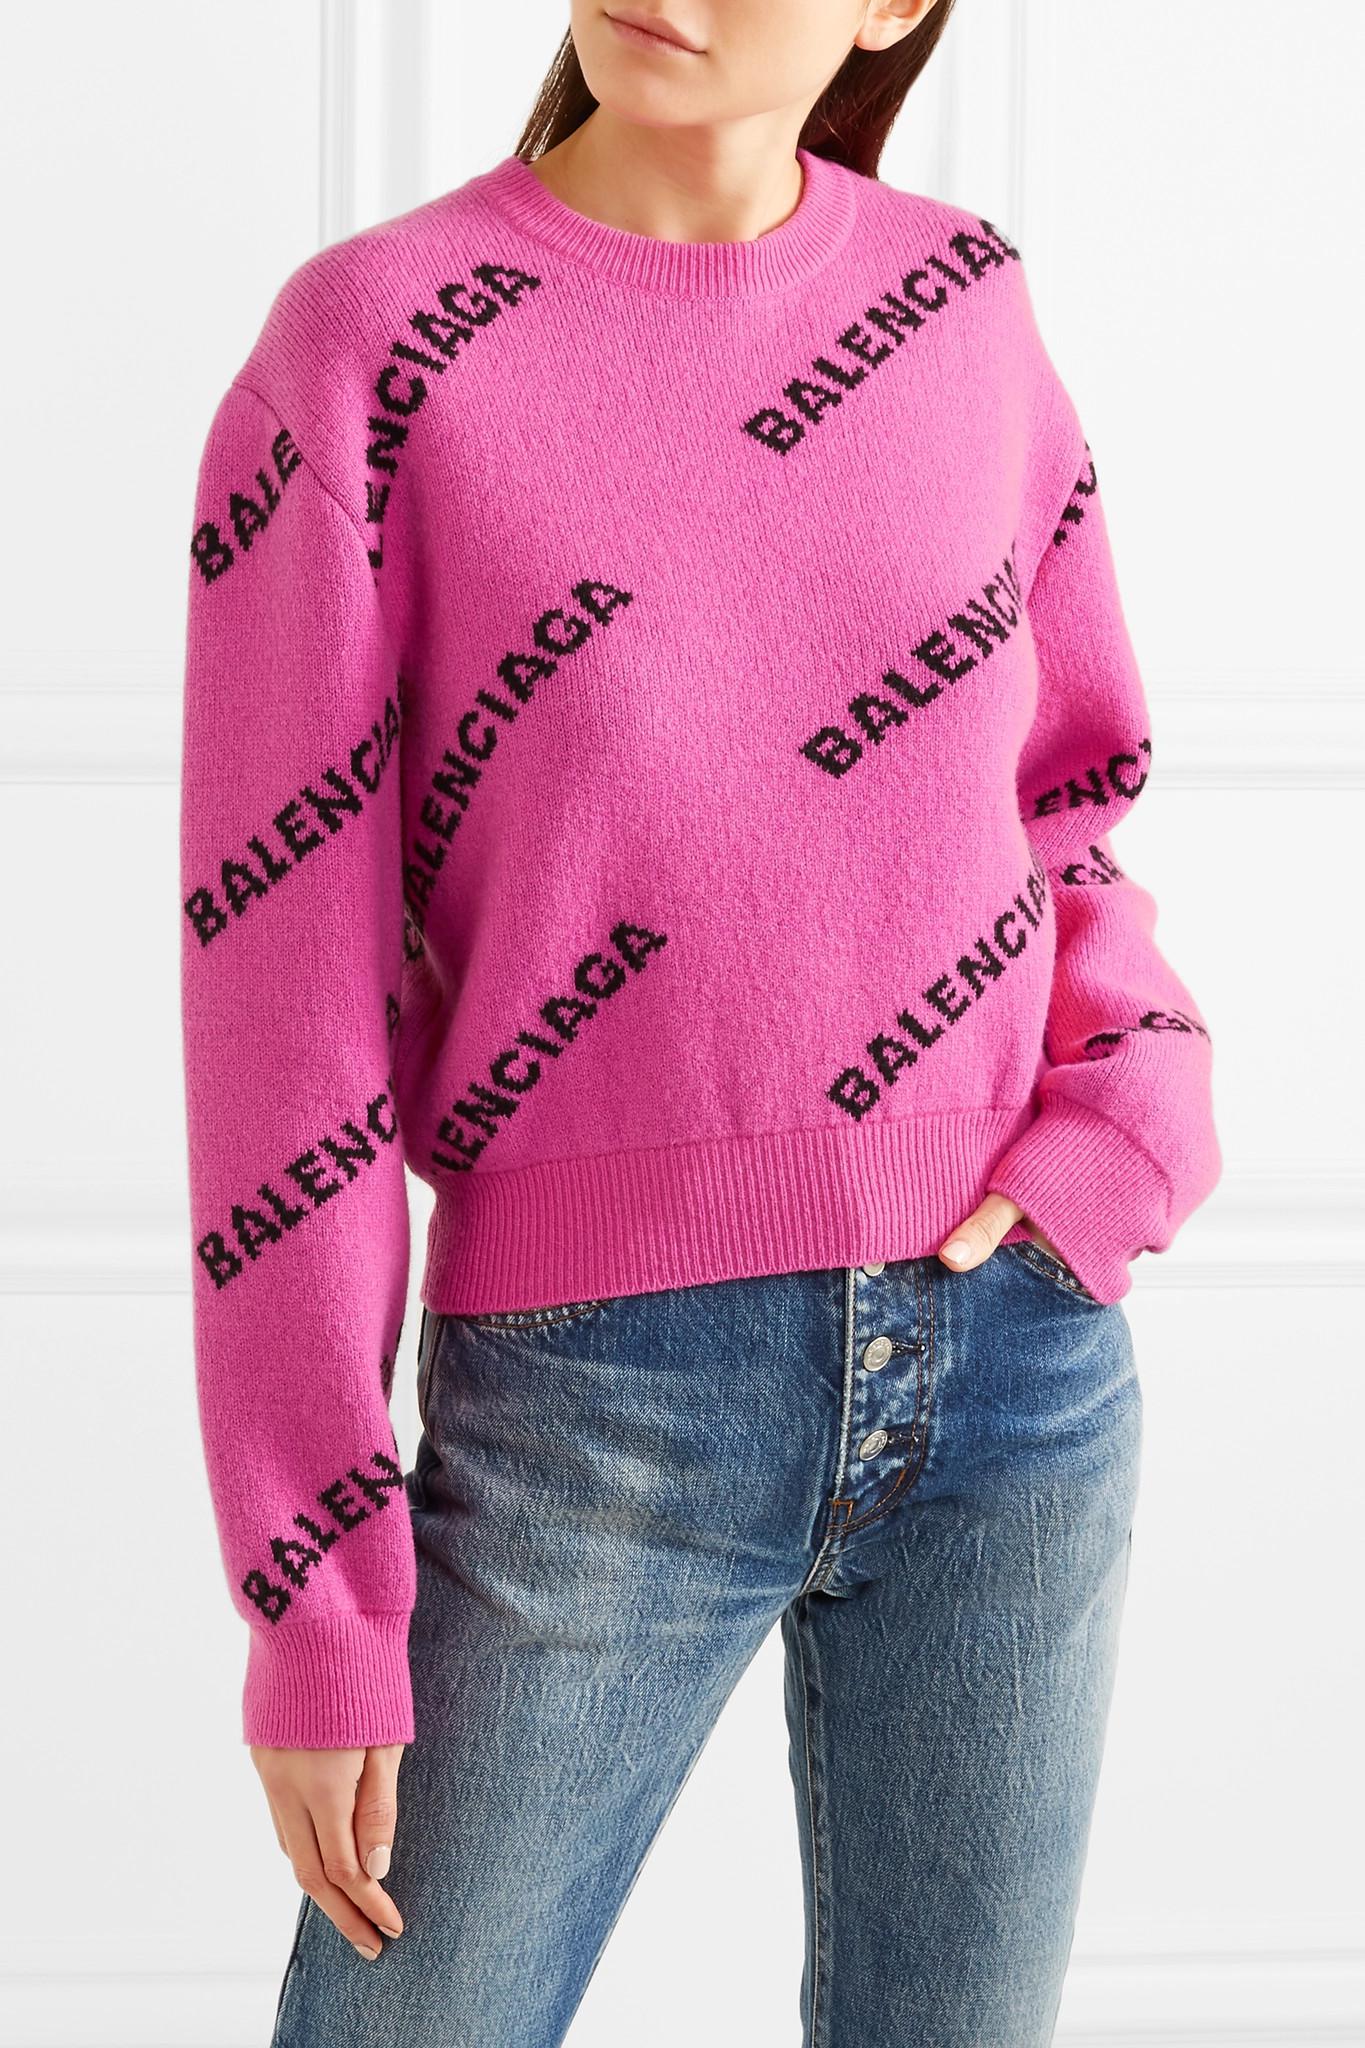 balenciaga pink jumper